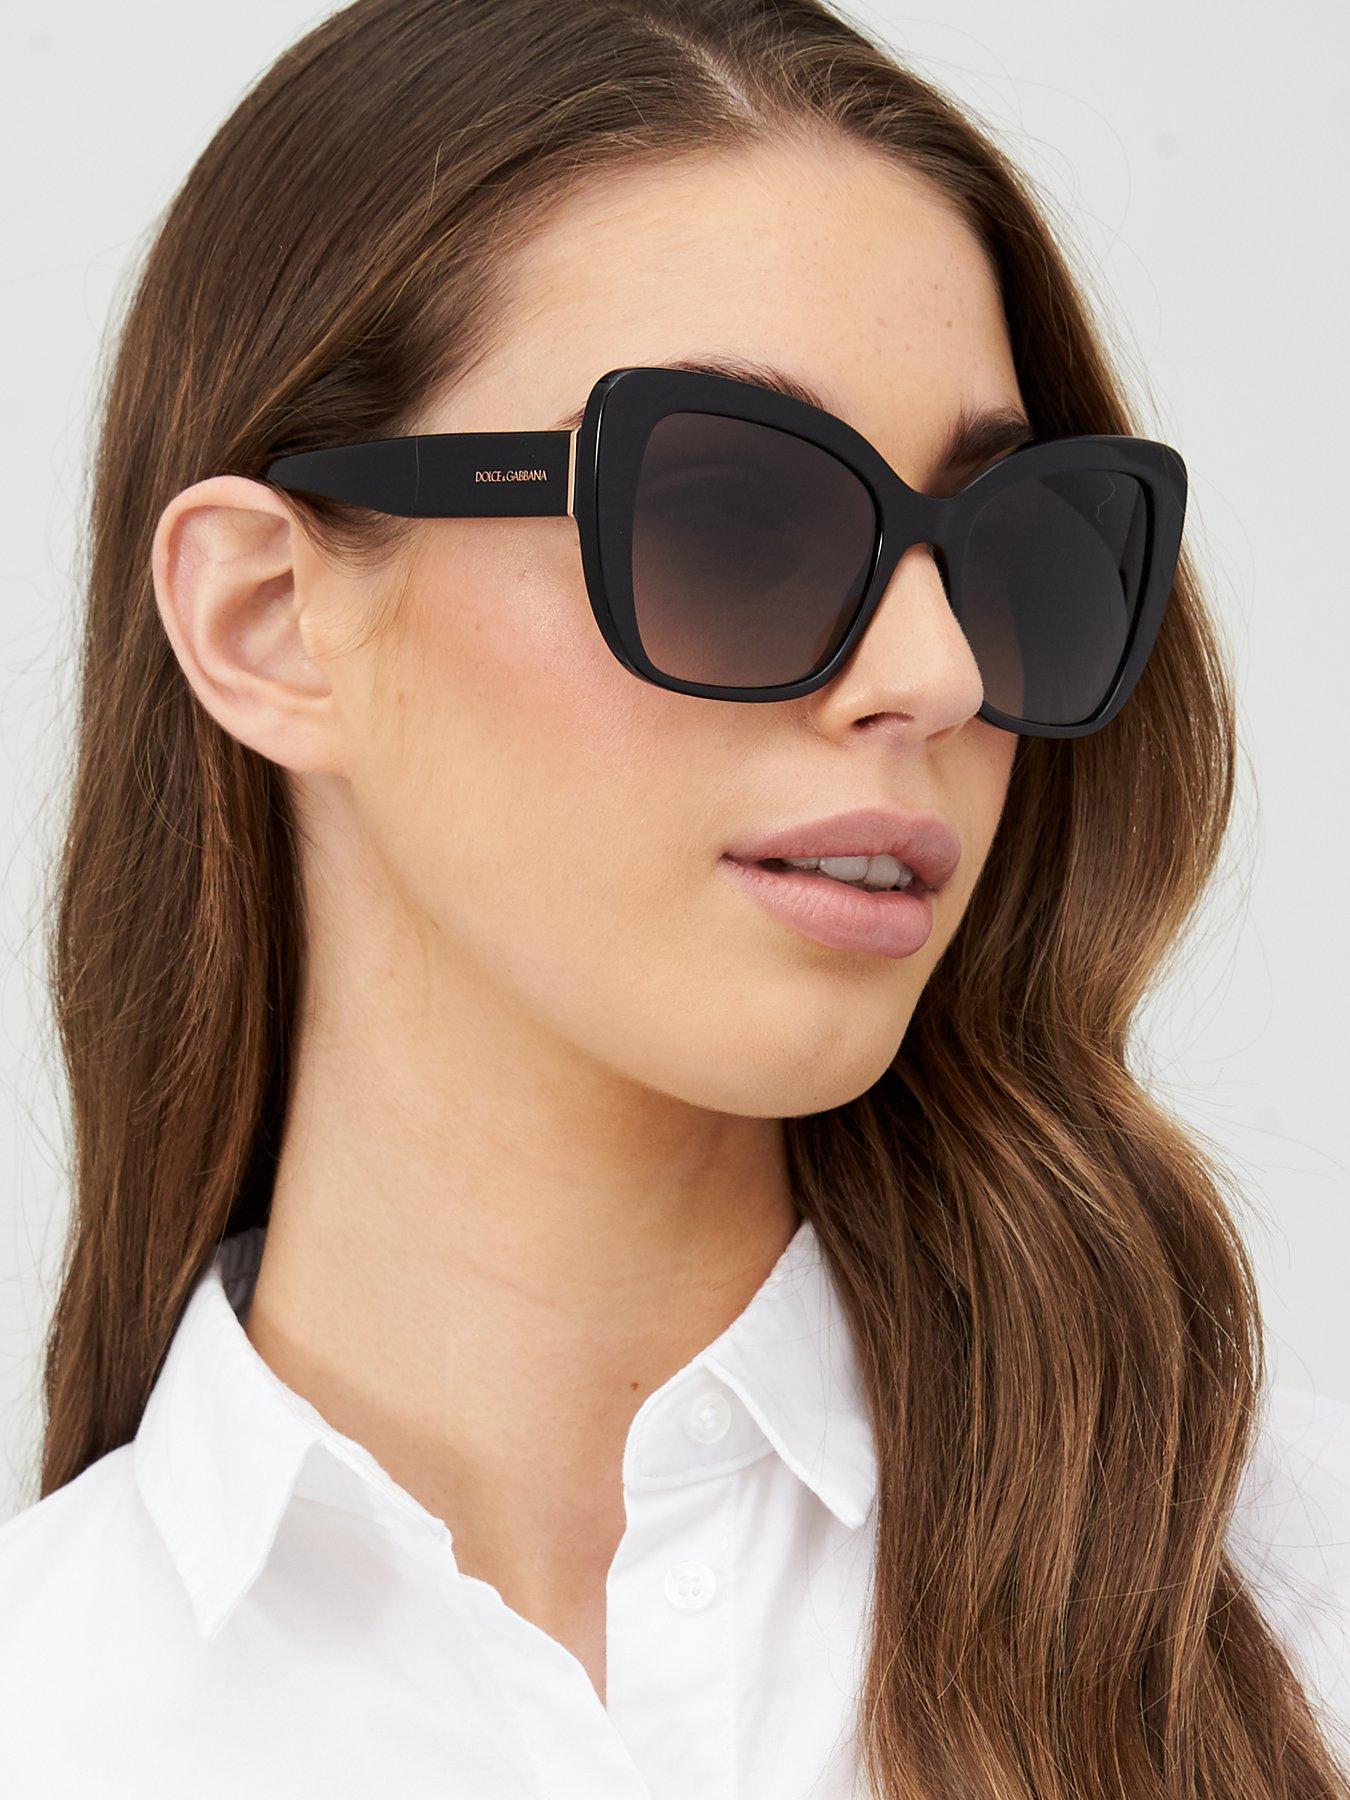 Arriba 82+ imagen dolce gabbana oversized sunglasses